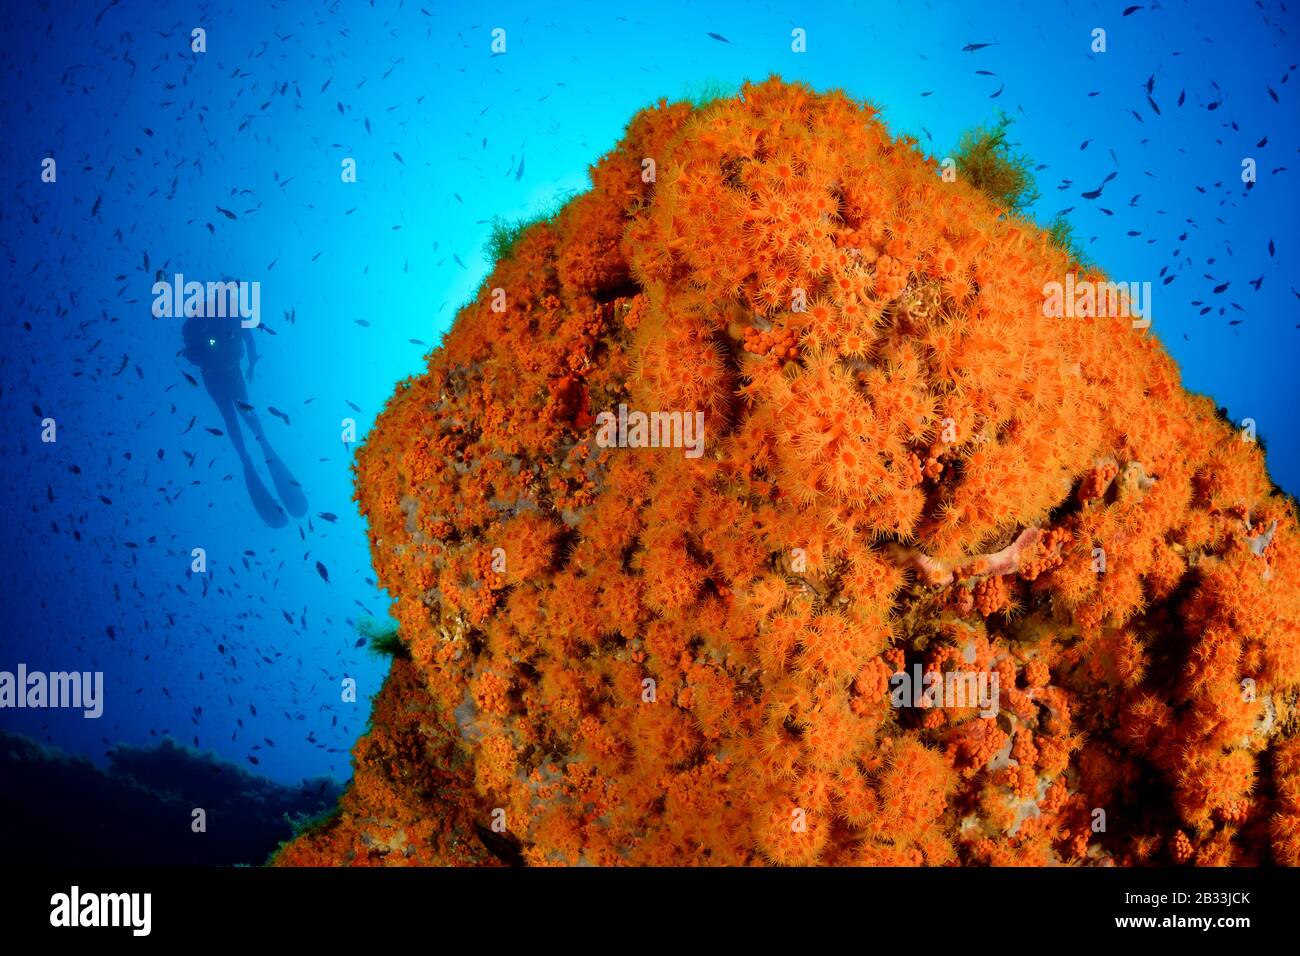 Yellow cluster anemone, Parazoanthus axinellae, Coralreef and scuba diver, Tamariu, Costa Brava, Spain, Mediterranean Sea, MR Stock Photo